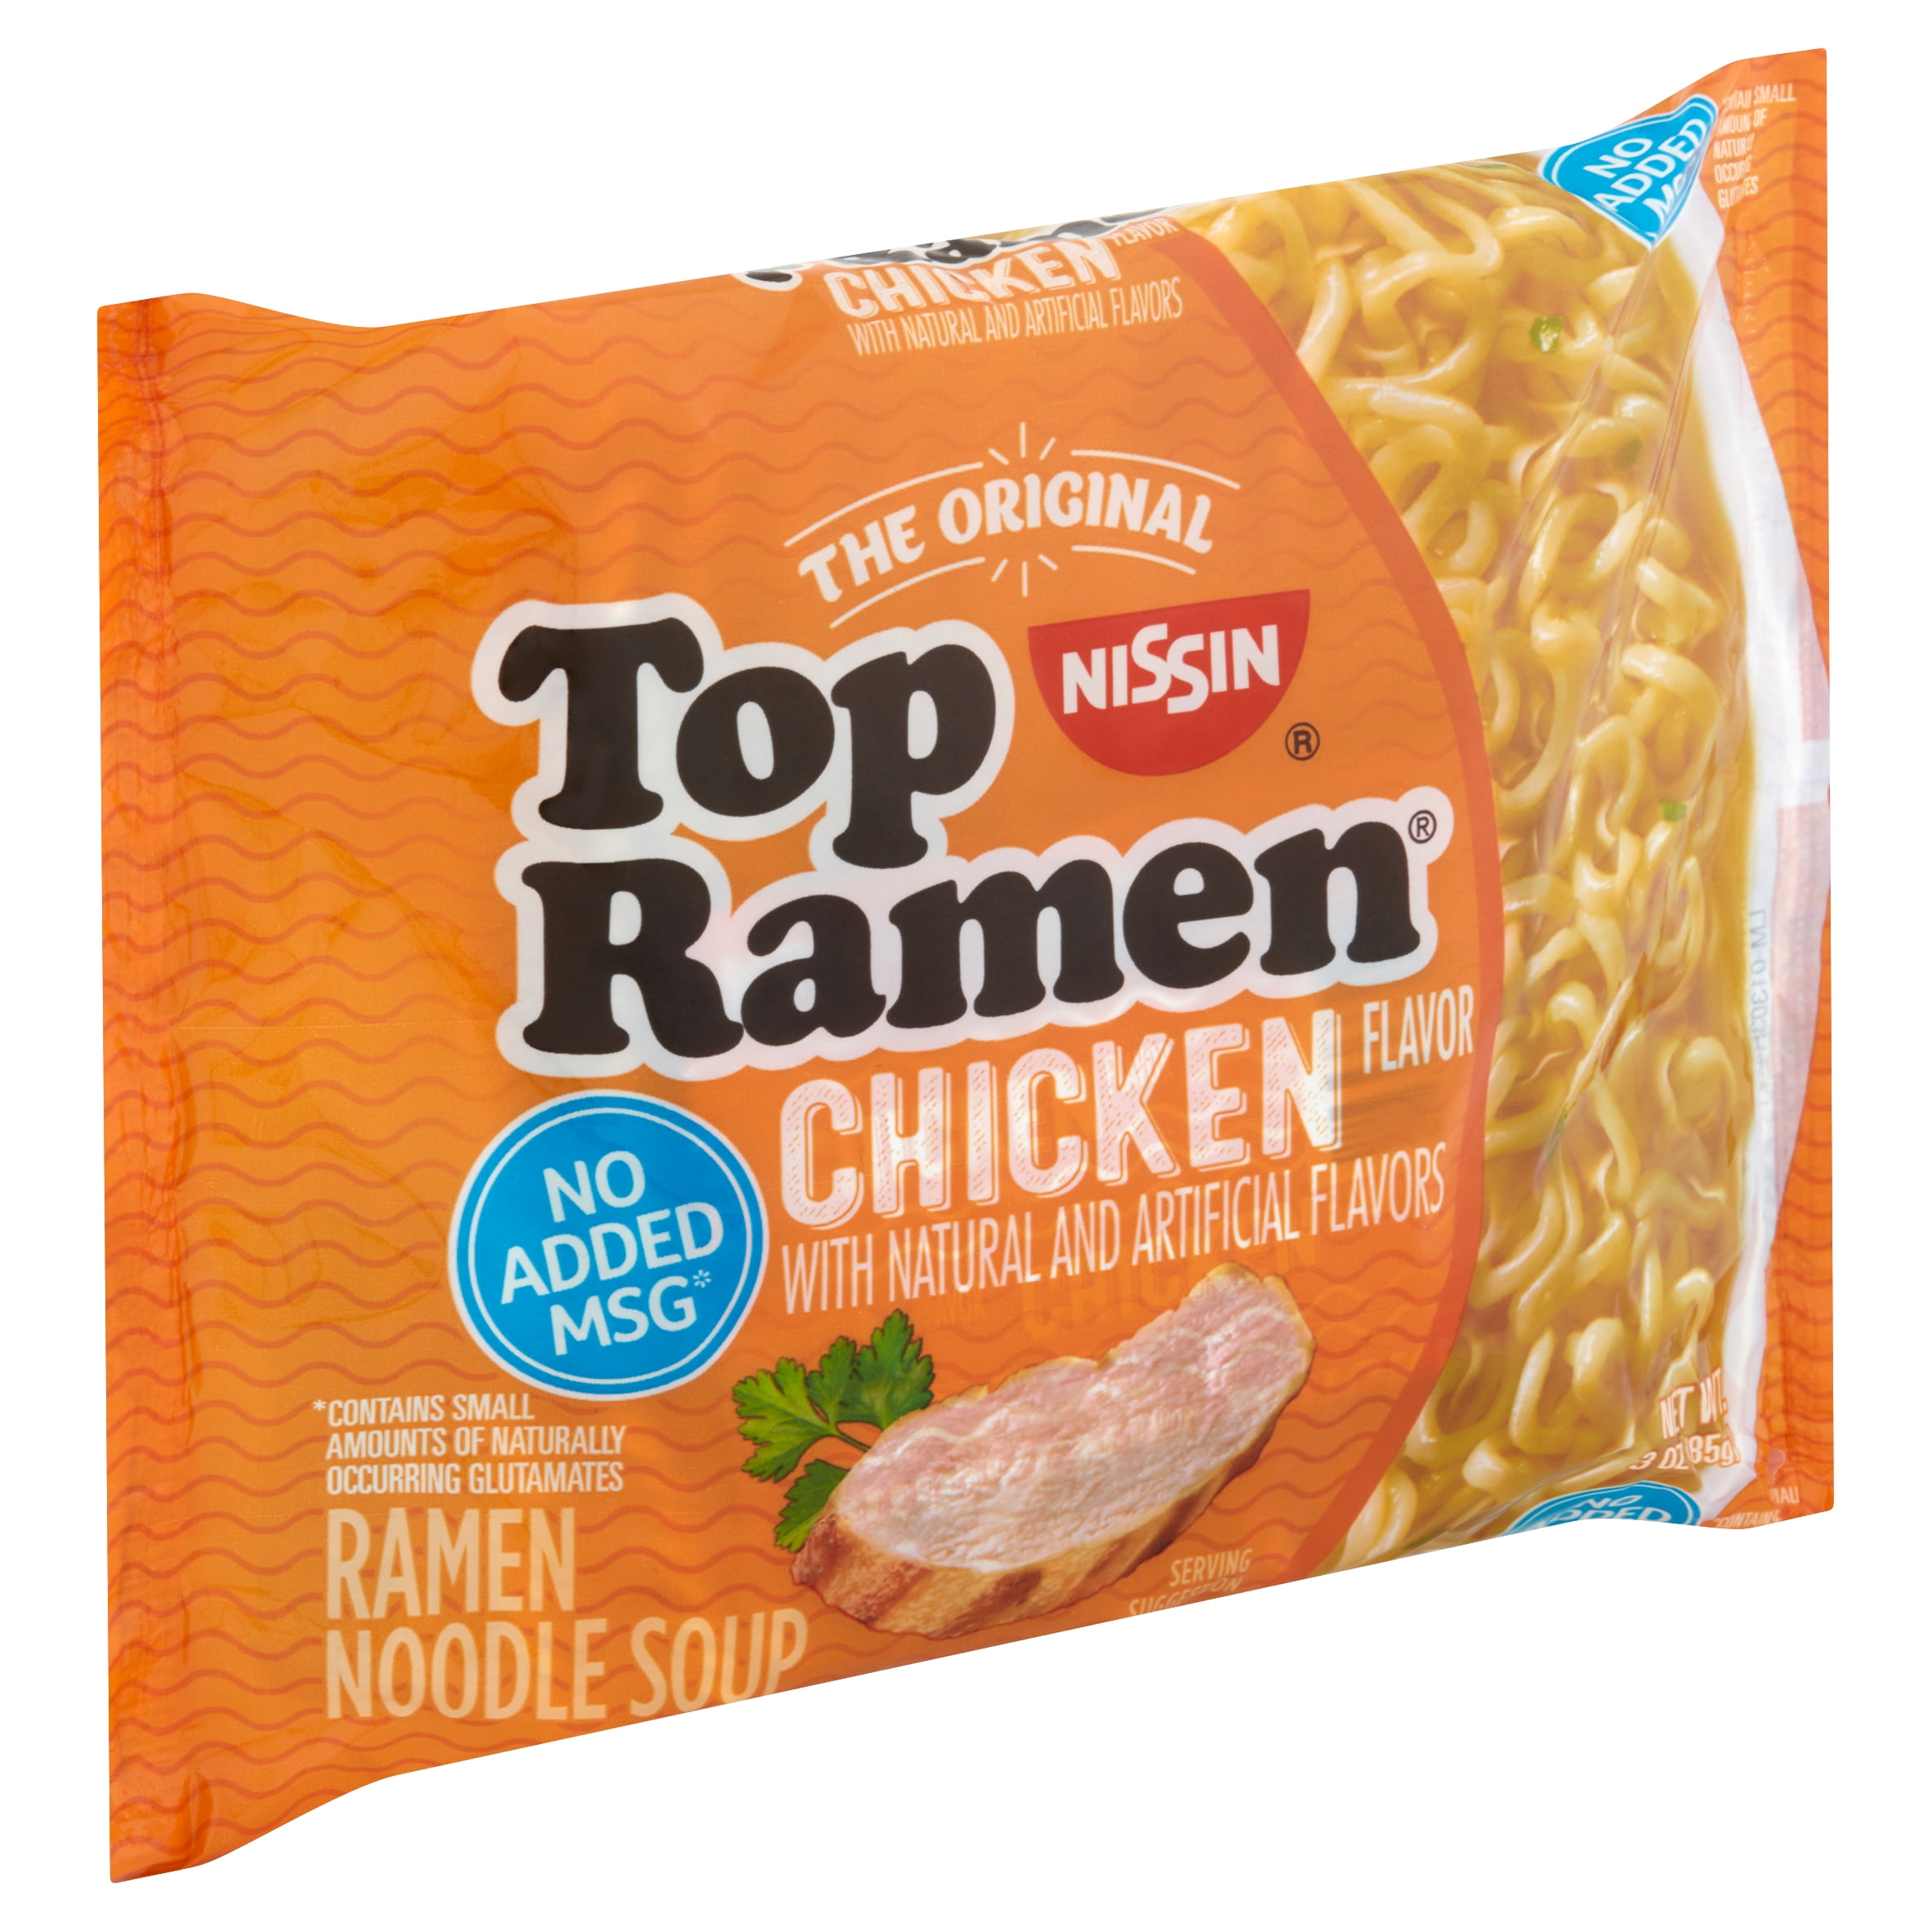 Nissin The Original Top Ramen Chicken Flavor Ramen Noodle Soup 3 Oz Walmart Com Walmart Com